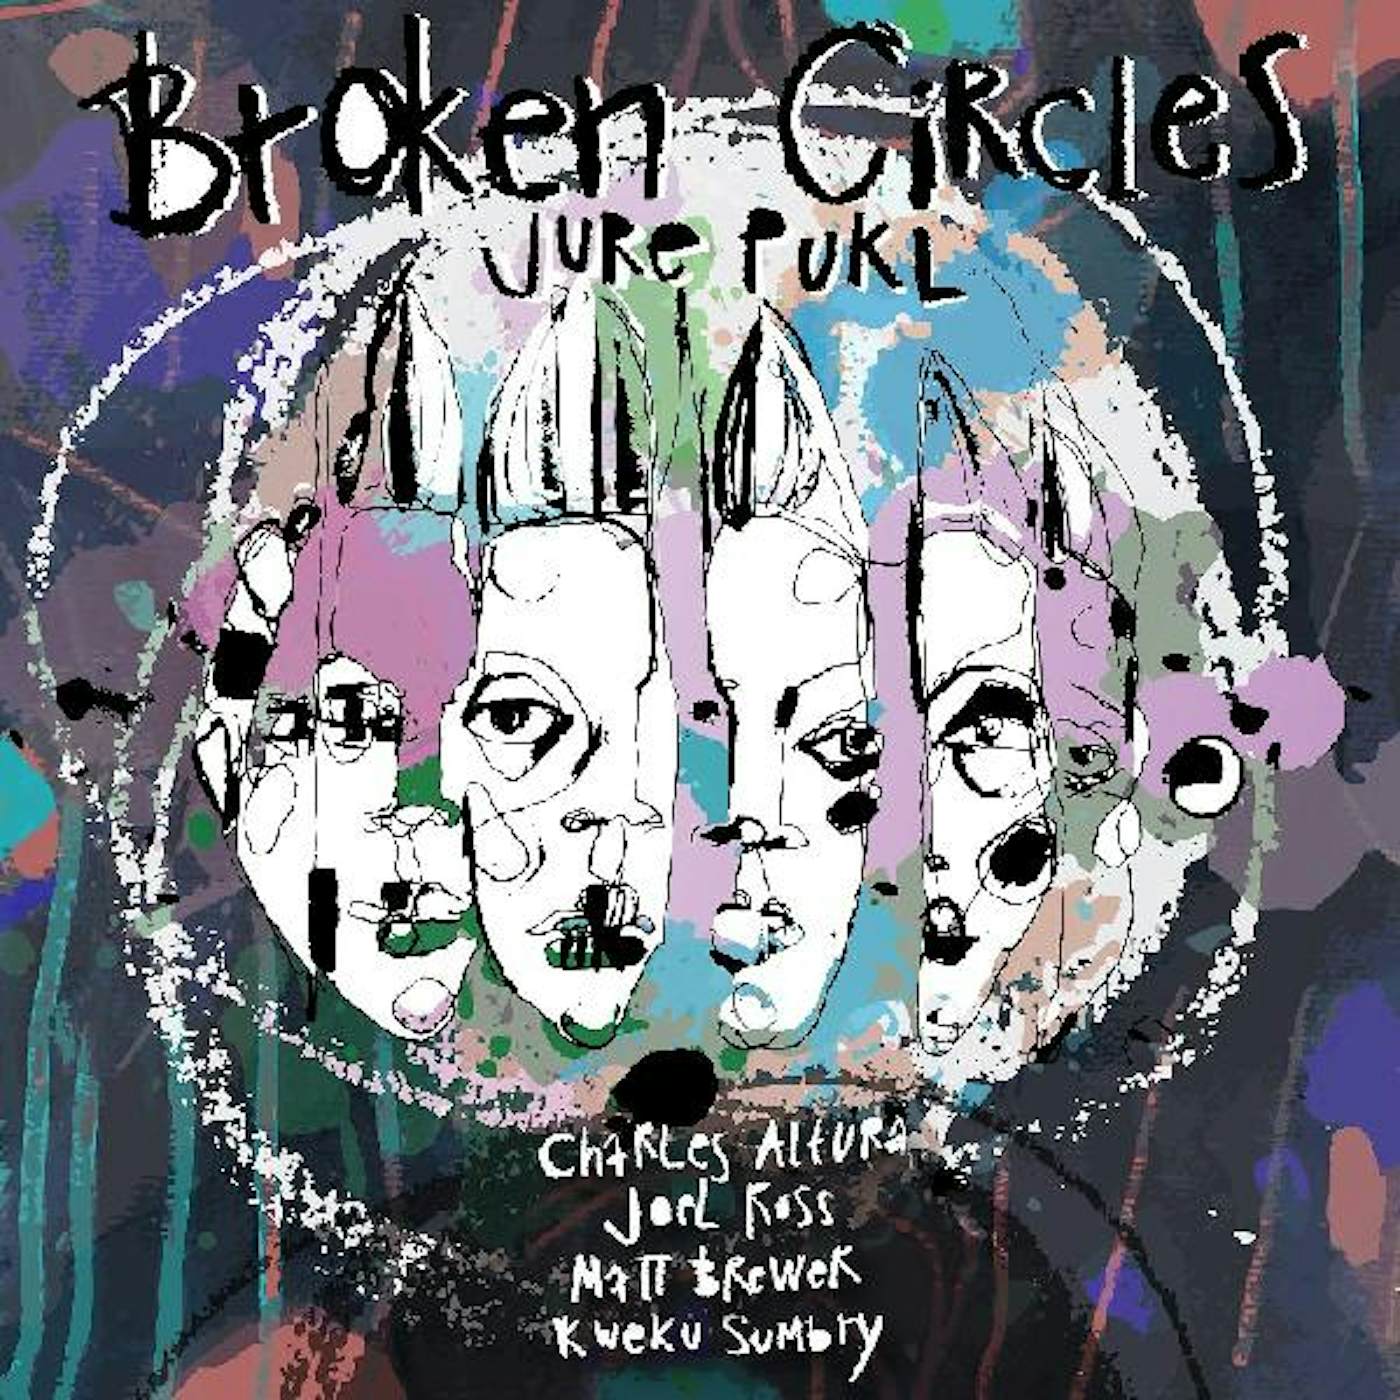 Jure Pukl Broken Circles Vinyl Record